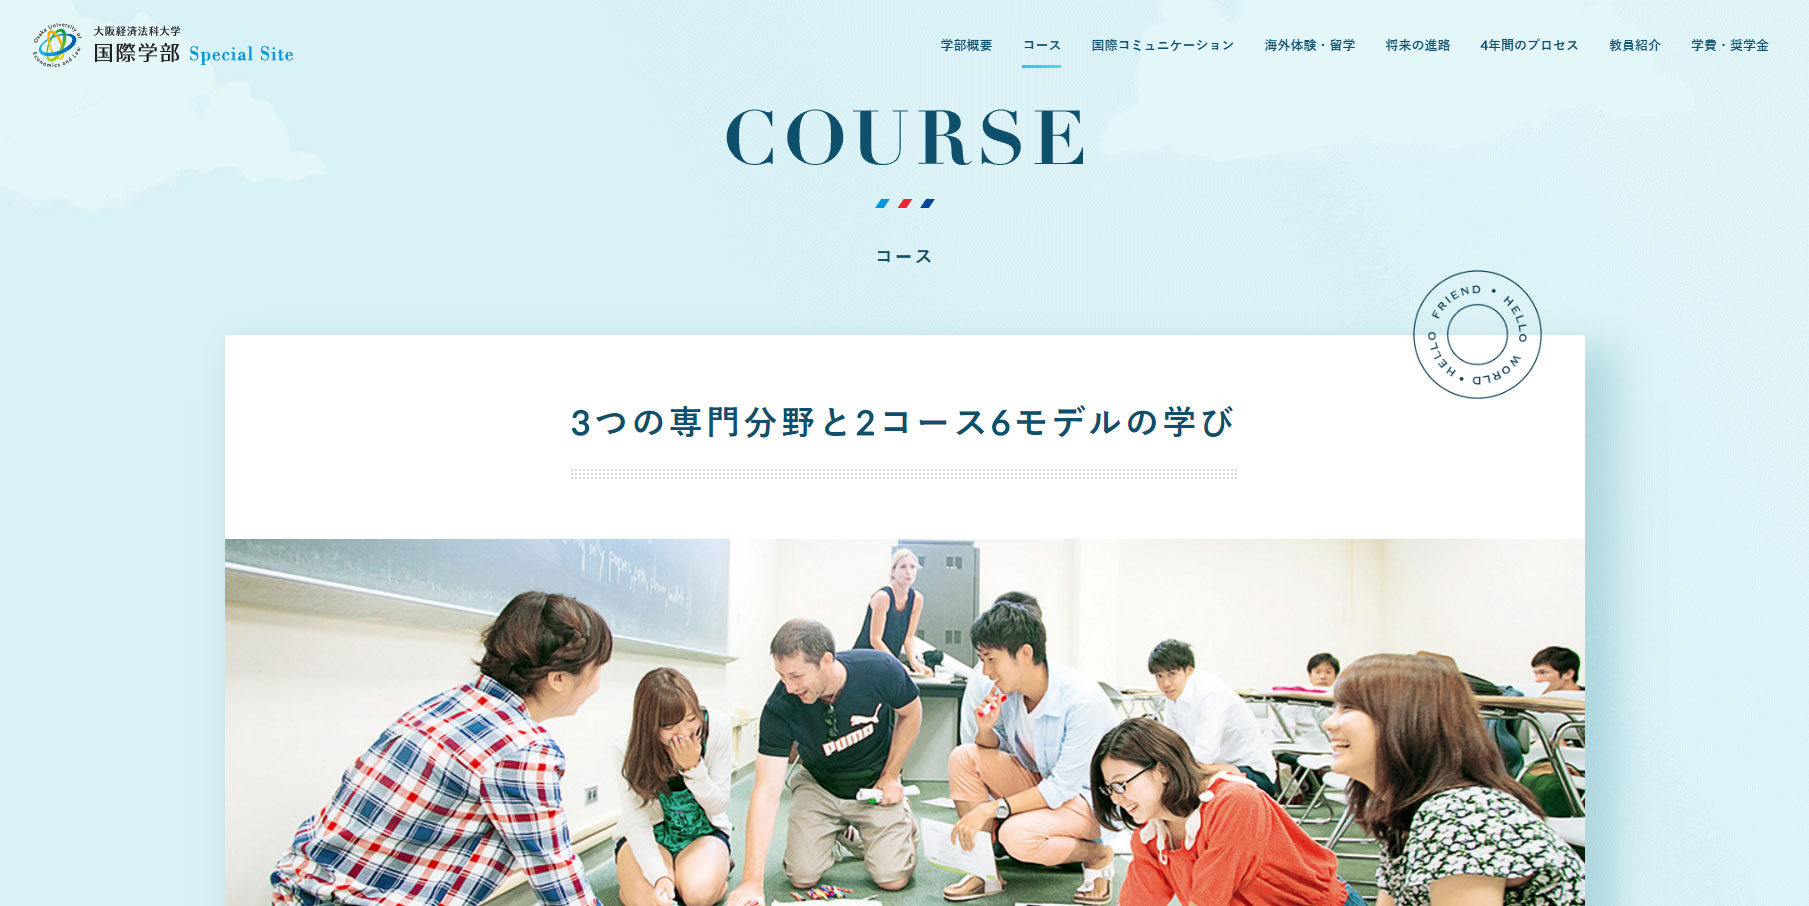 Osaka University of Economics and Law - Website of the Day